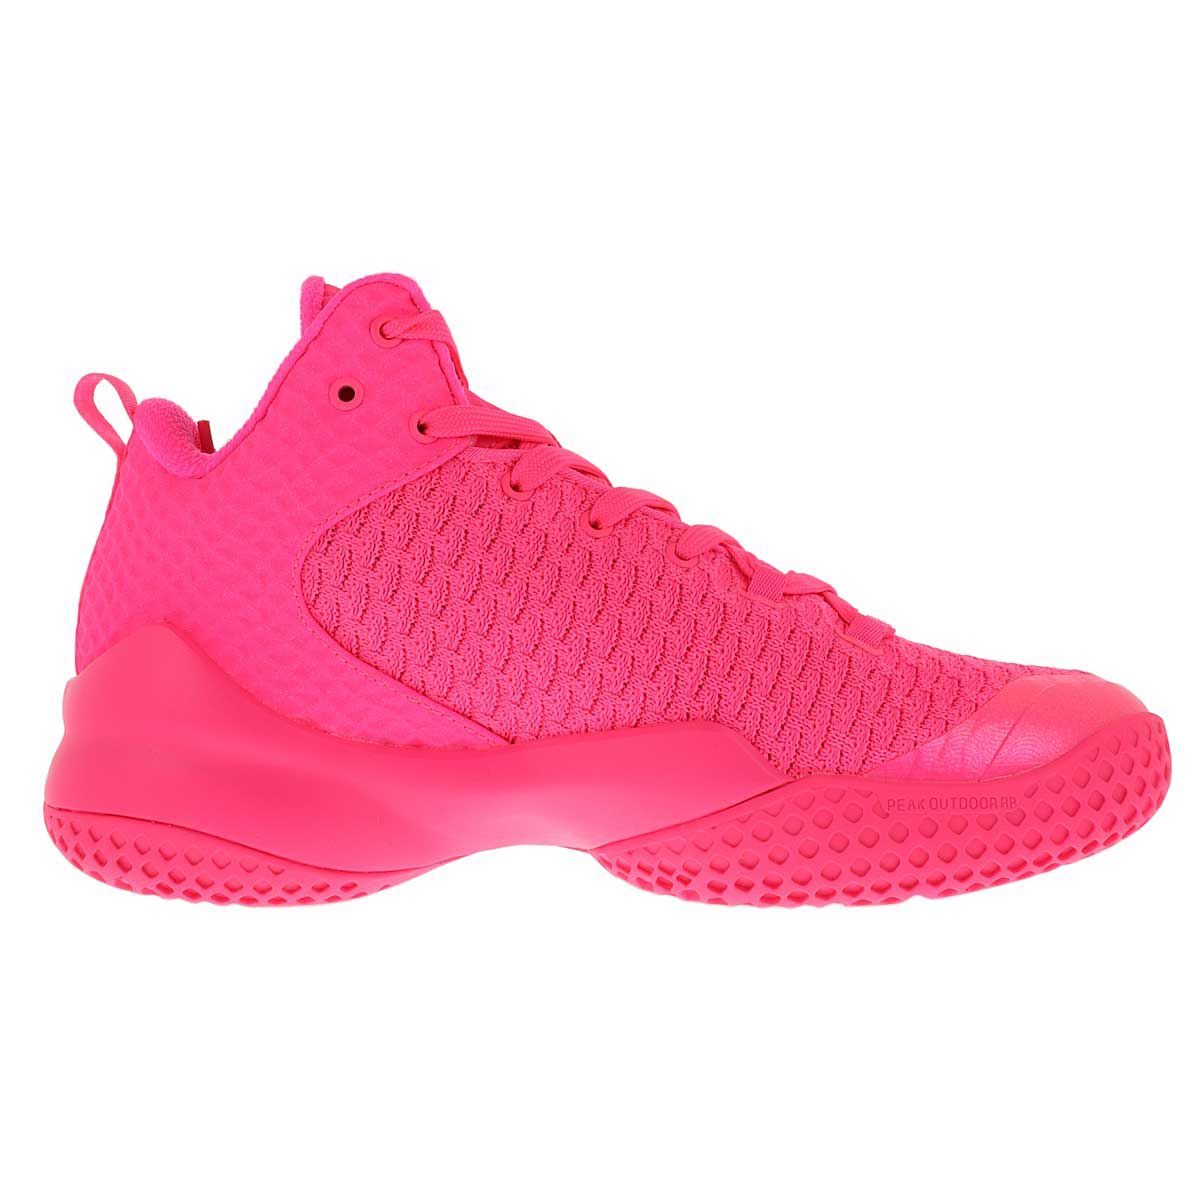 🏀 Get the LOU WILLIAMS STREETBALL MASTER basketball shoe - pink | KICKZ